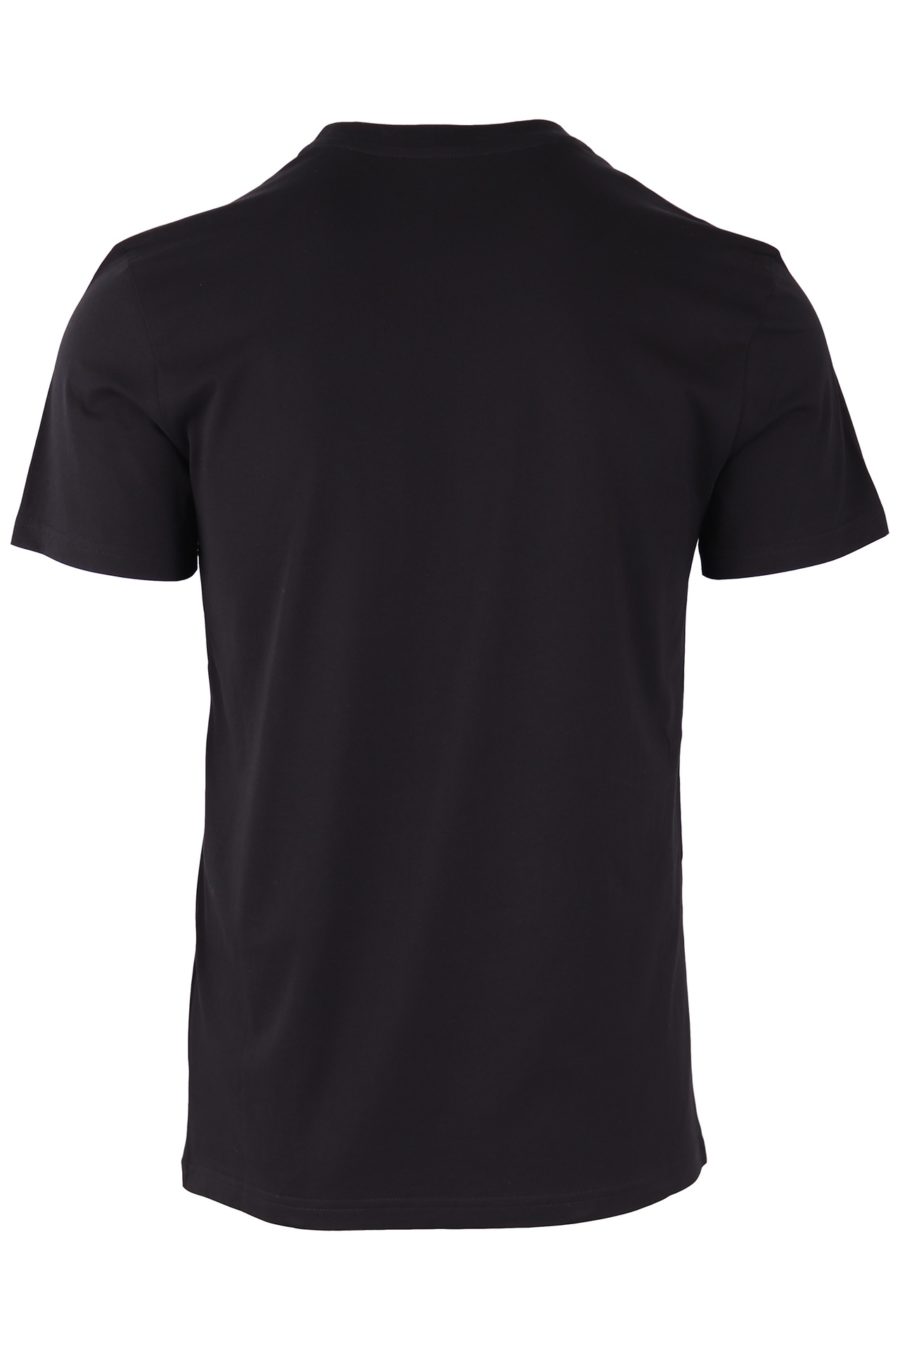 Moschino Couture Milano schwarzes T-Shirt mit weißem Logo - 2f1eed7cf6e2a3e9b5314da67760c824c9ed5c5f